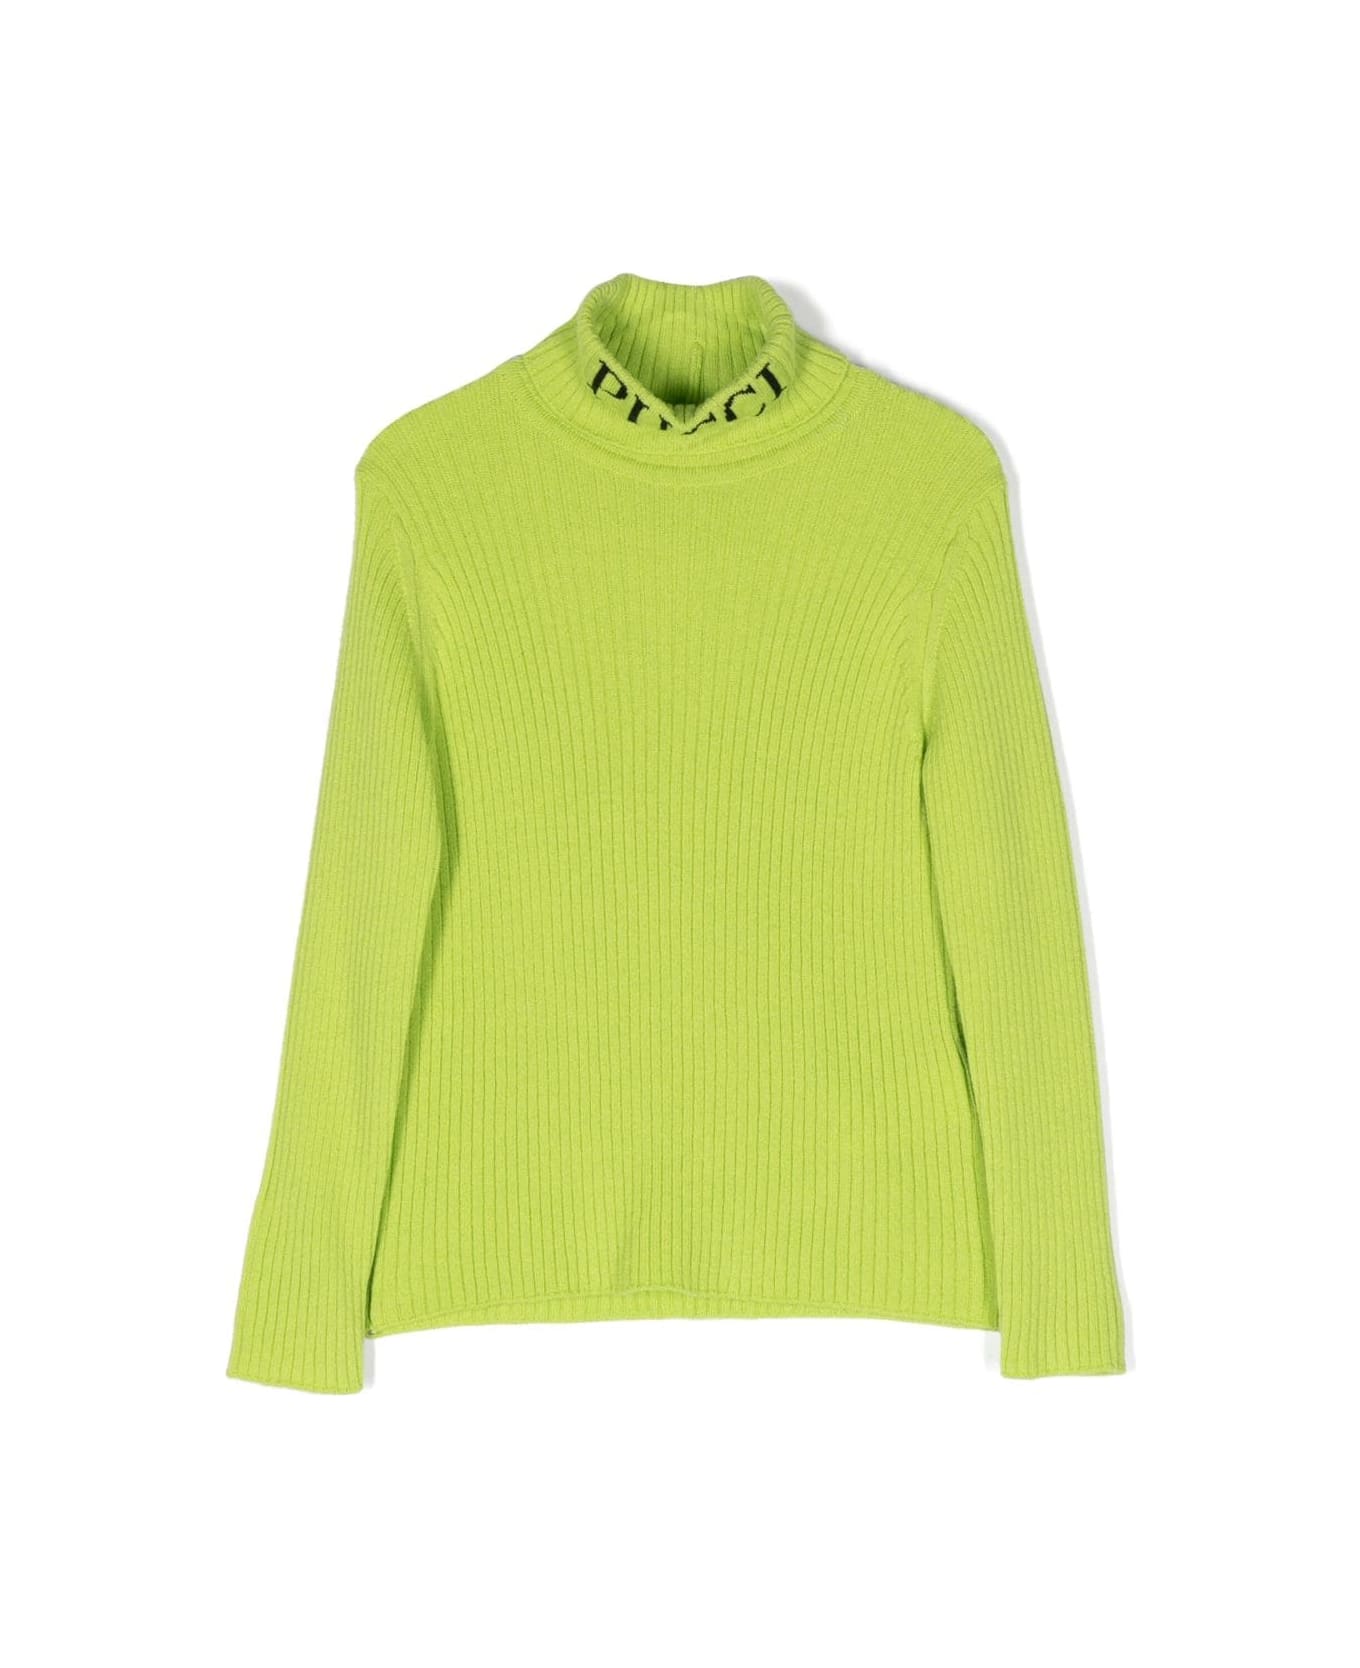 Pucci Knitwear - Lime